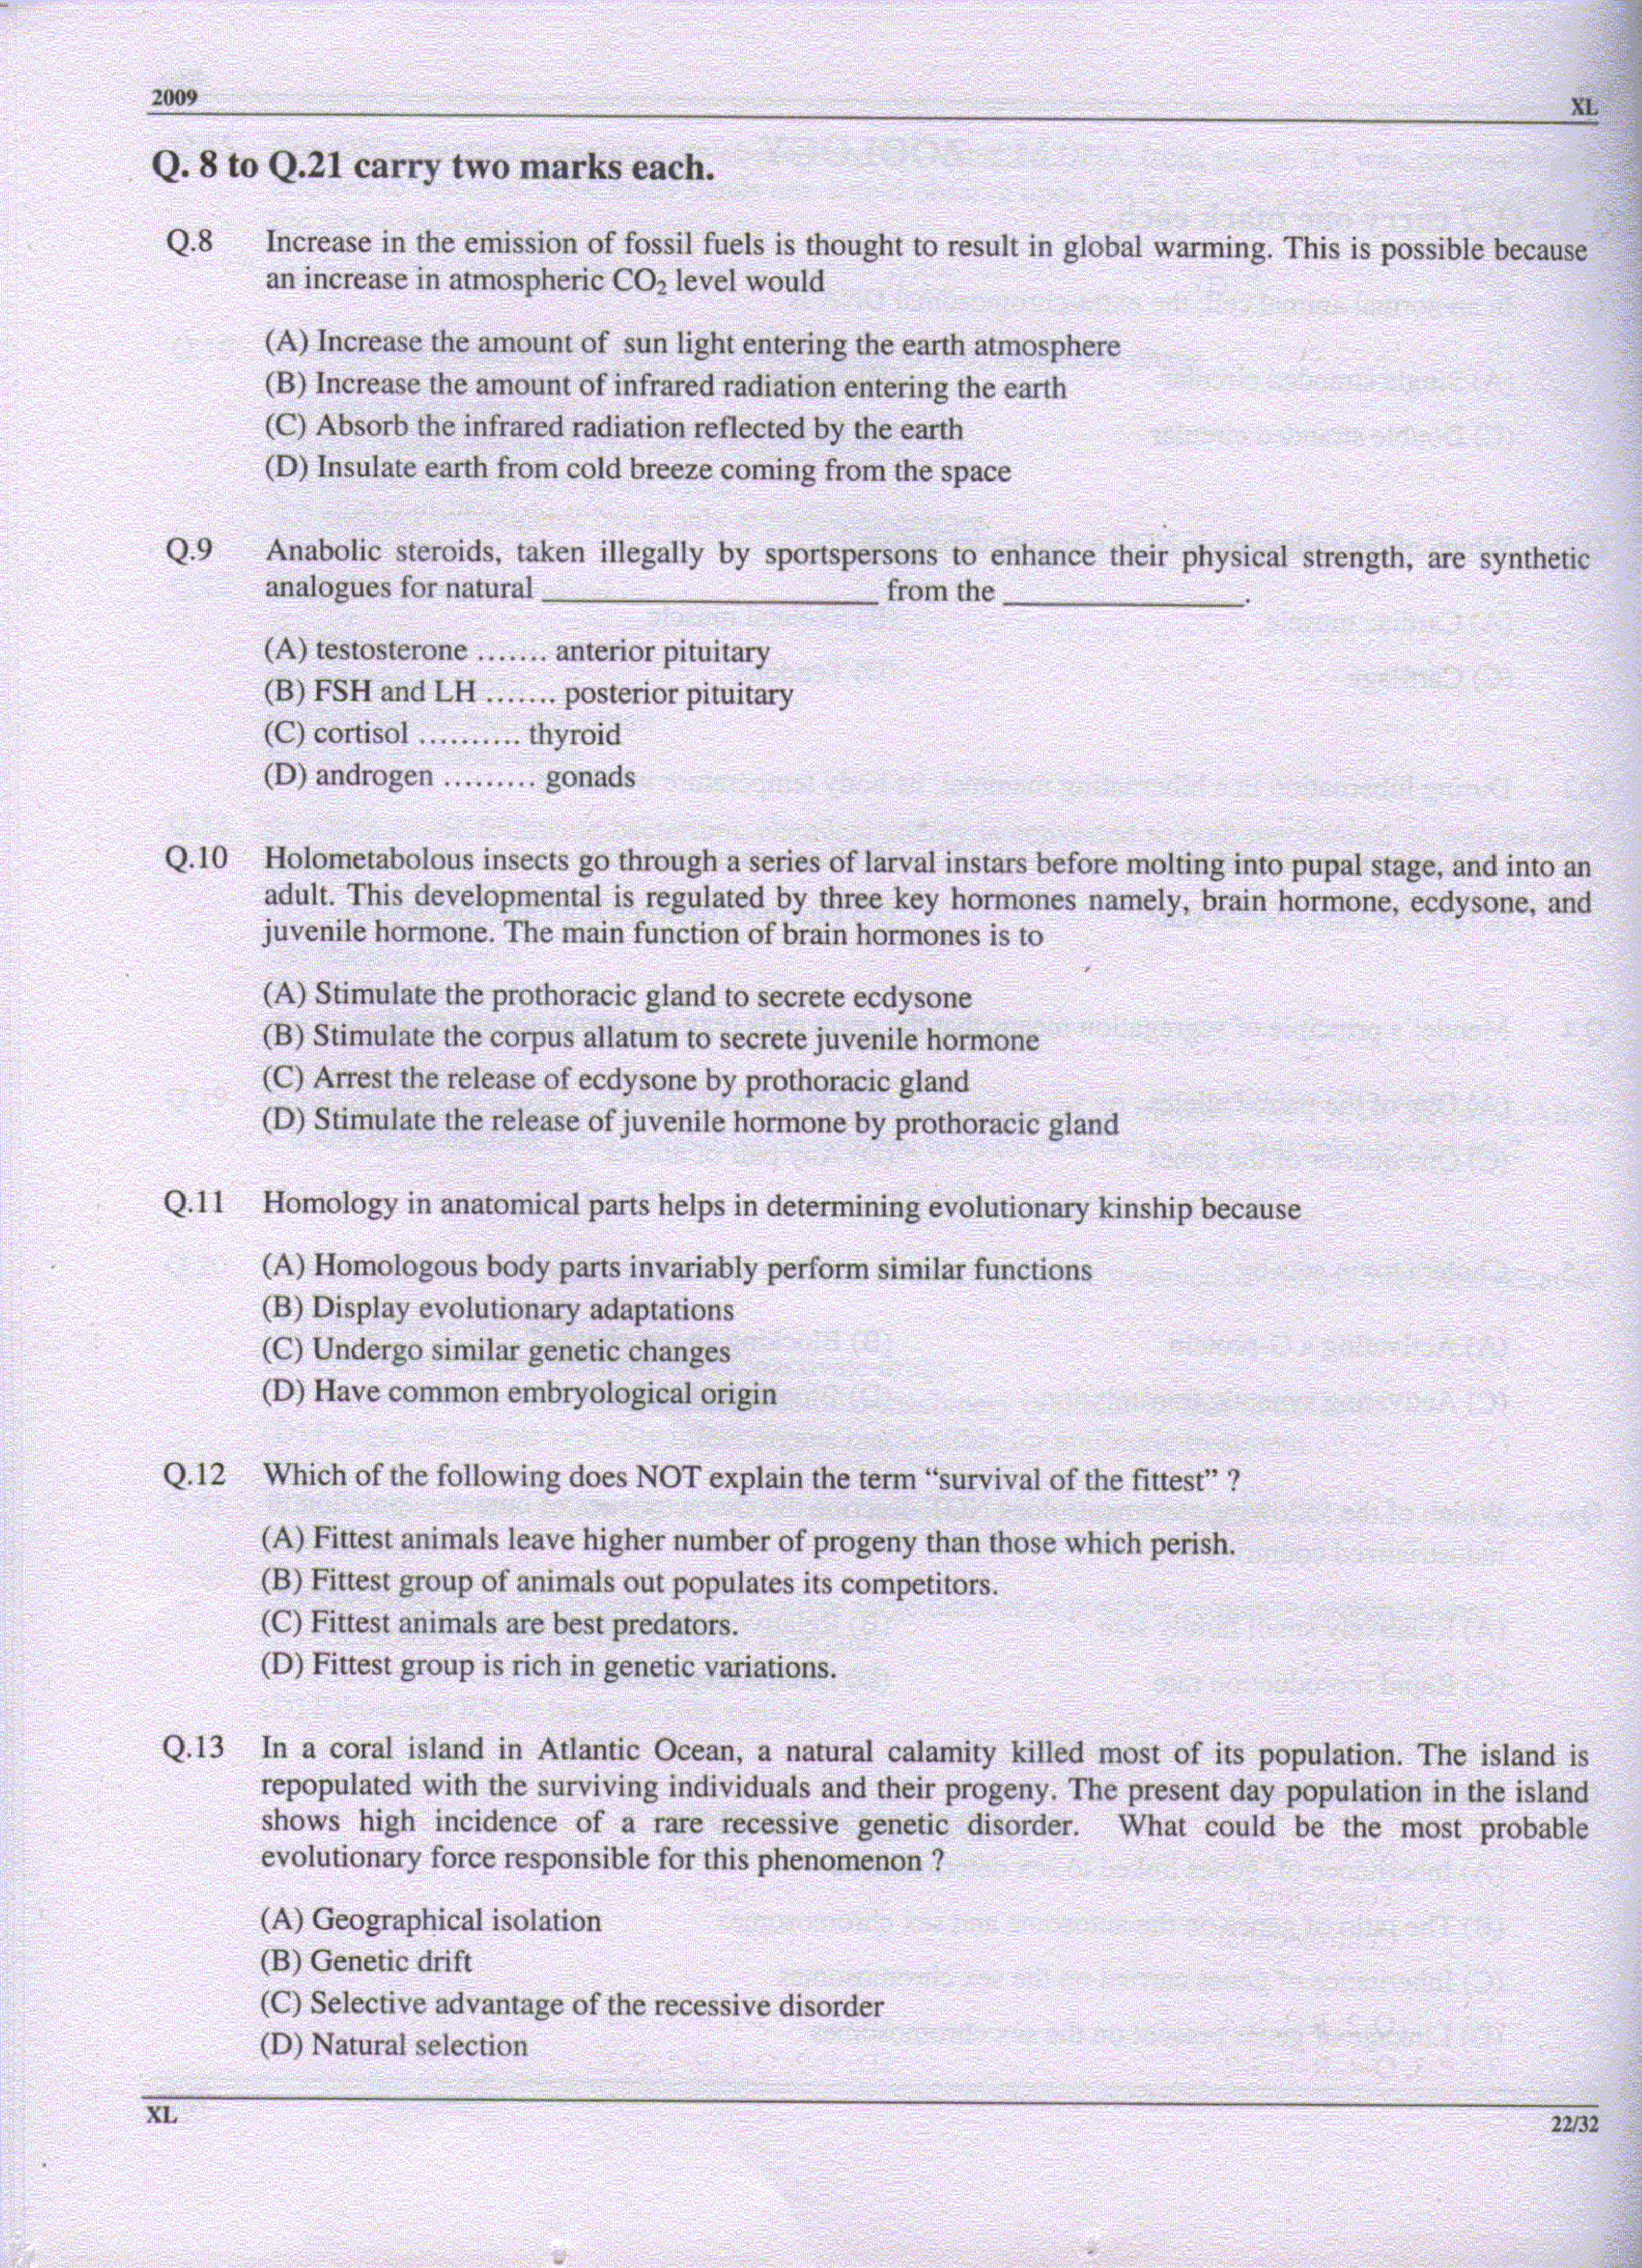 GATE Exam Question Paper 2009 Life Sciences 22